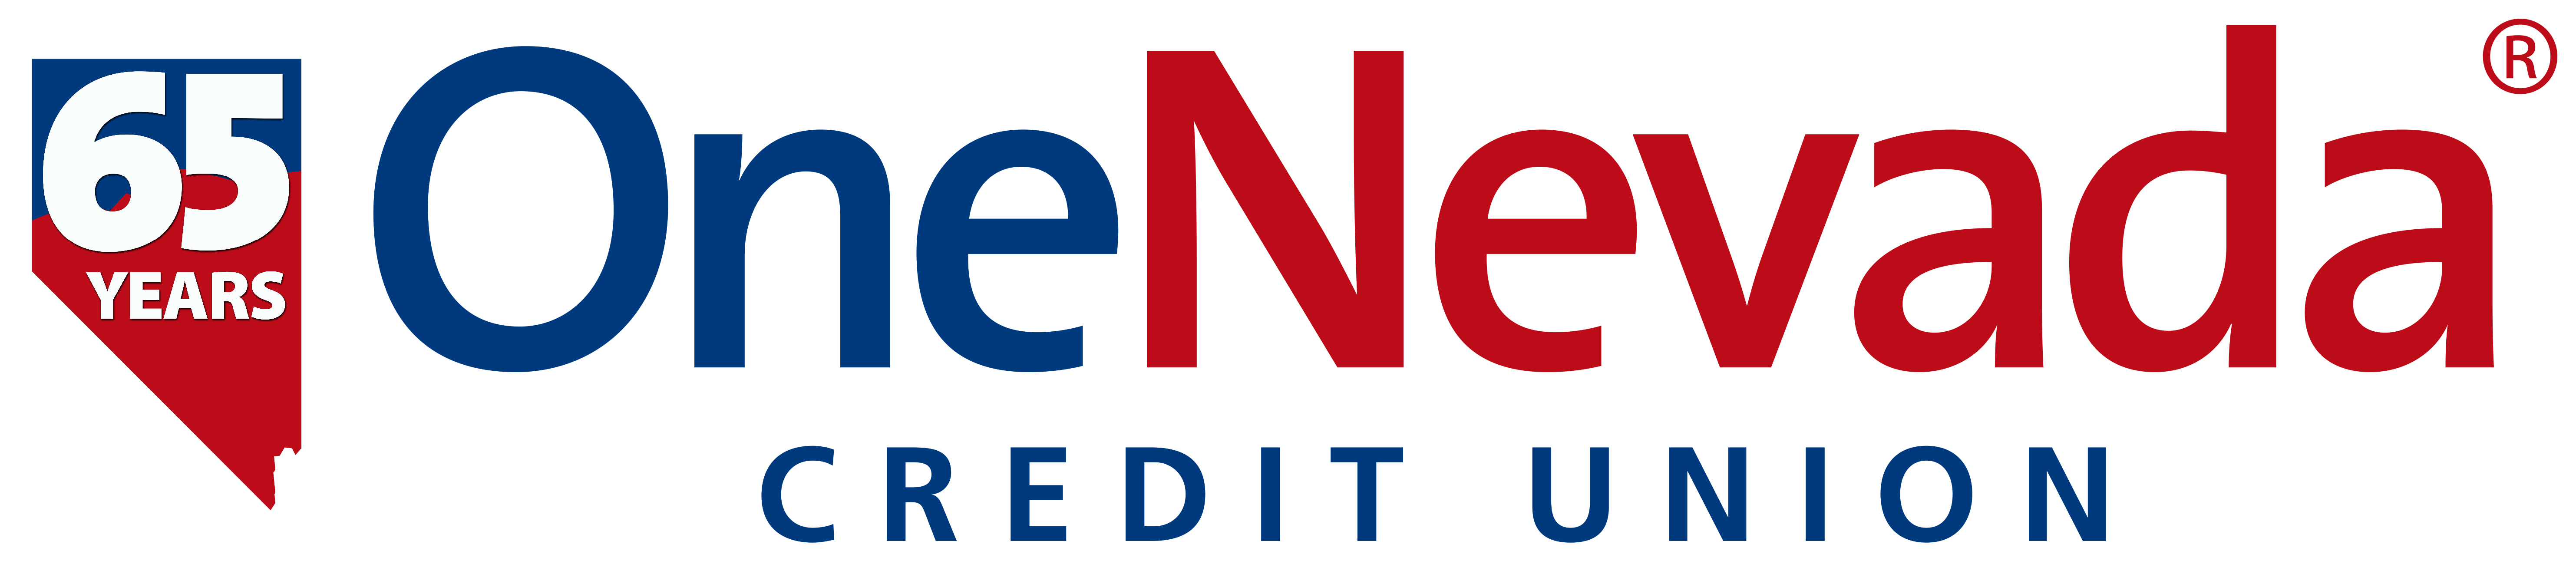 One Nevada Credit Union's 65th Anniversary logo